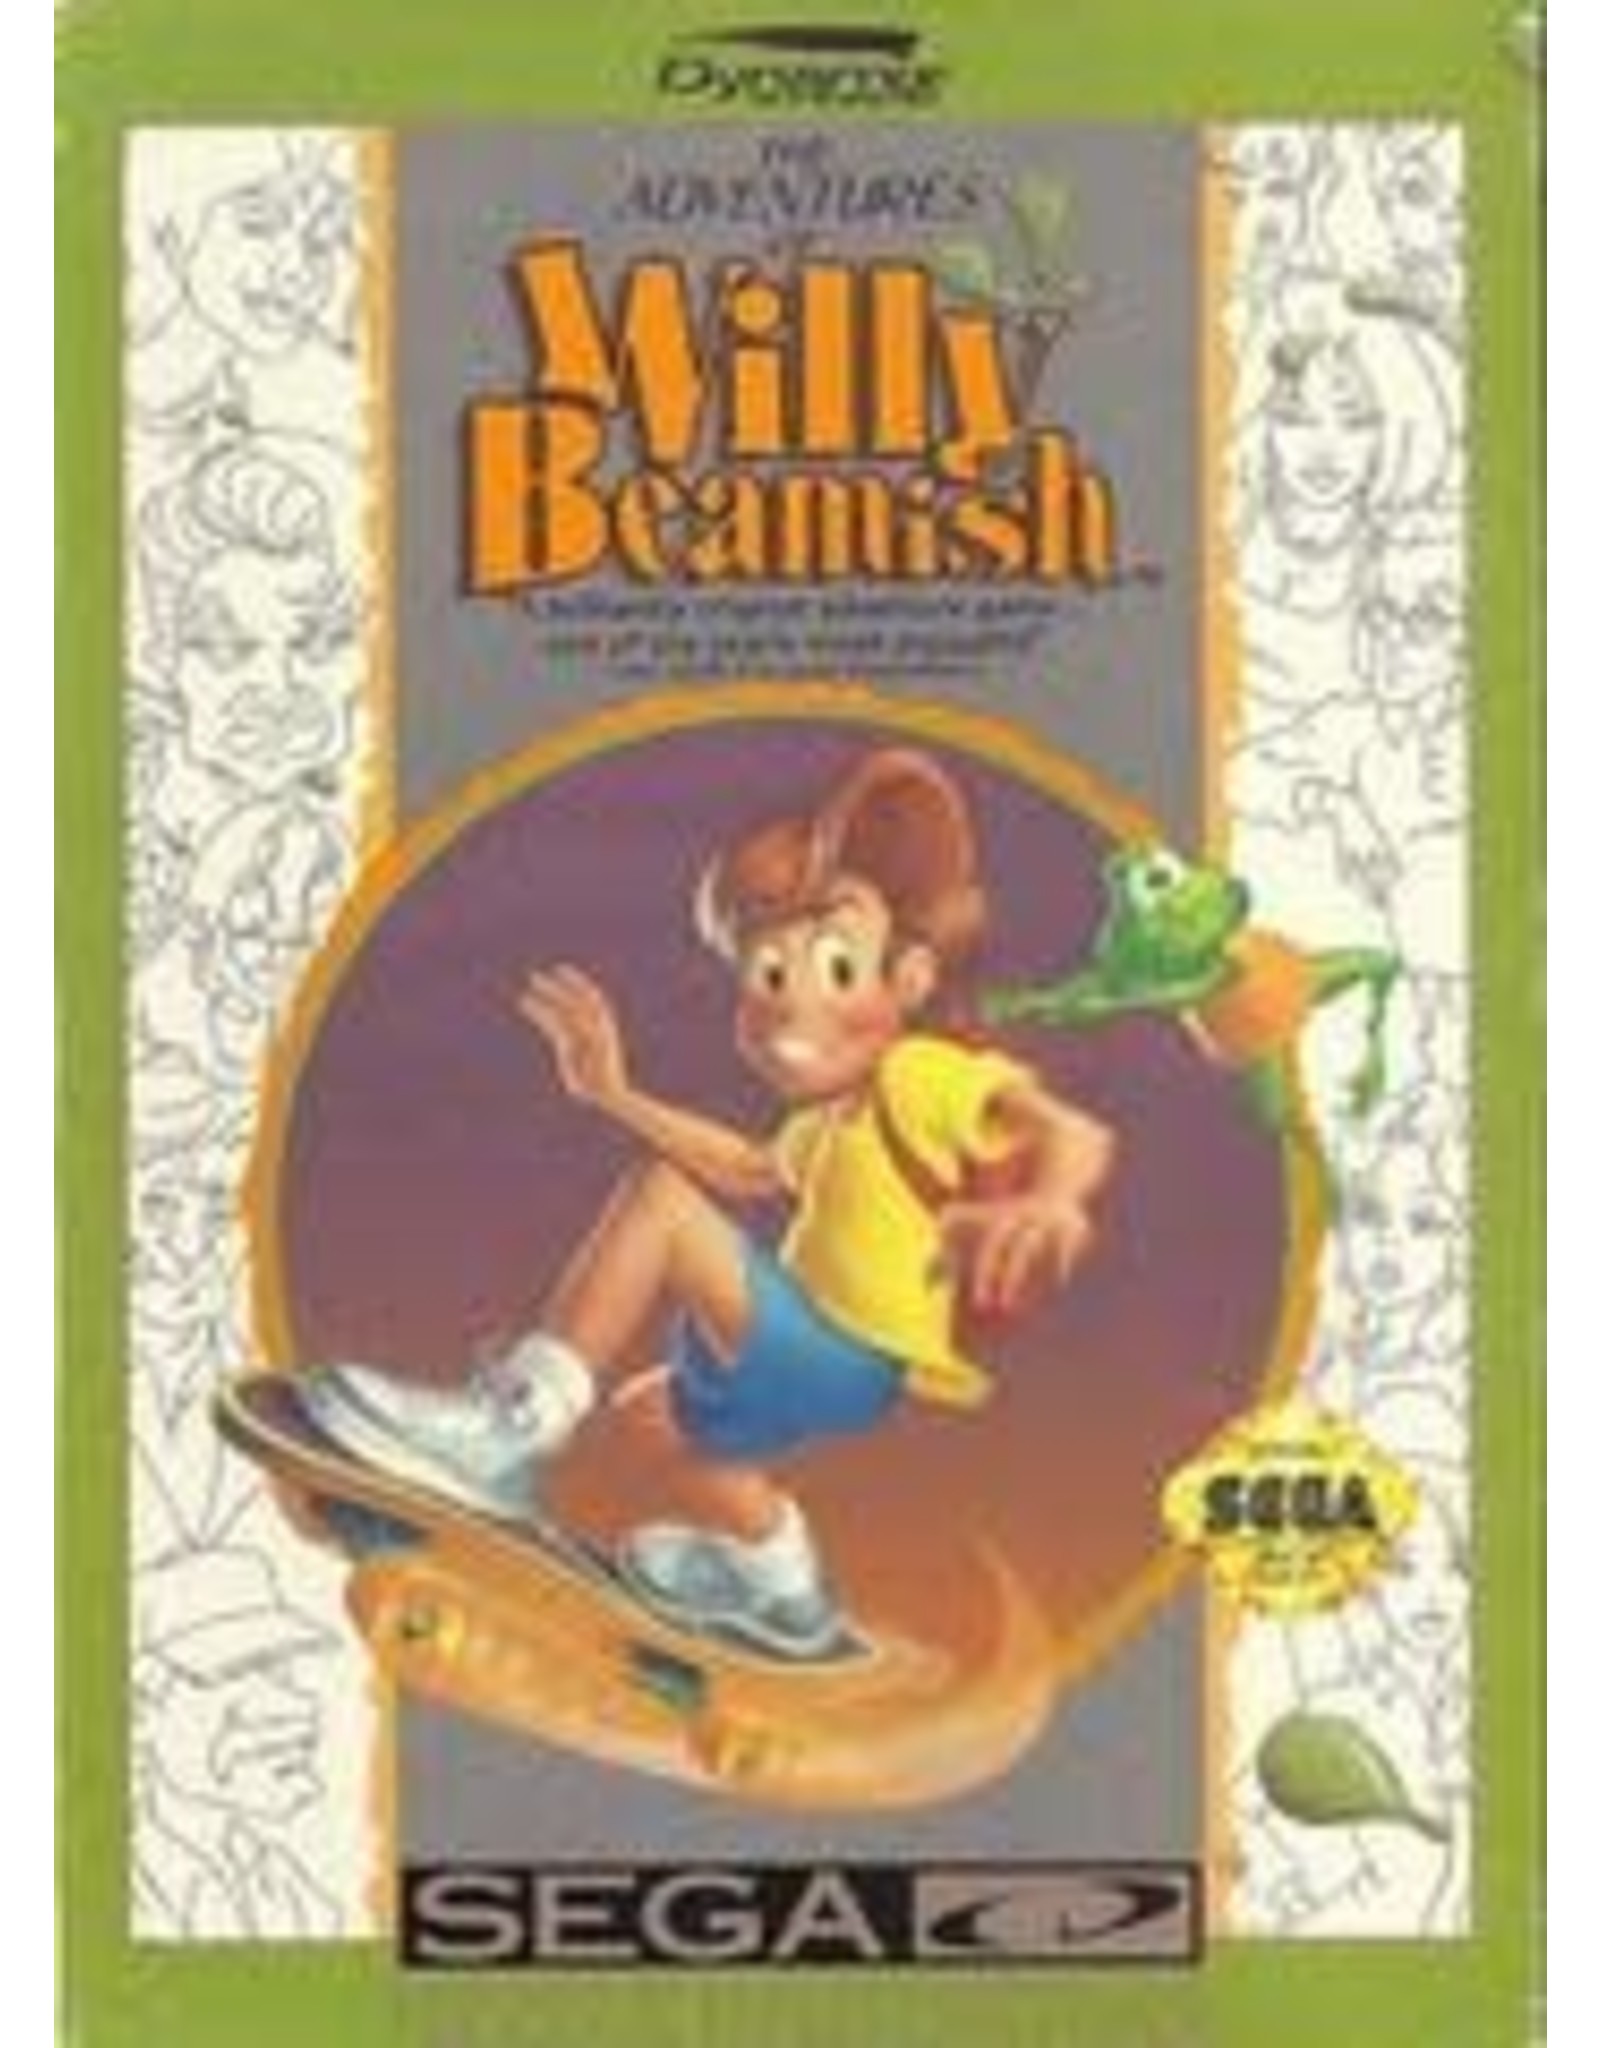 Sega CD Adventures of Willy Beamish (No Manual, Heavily Damaged Box)